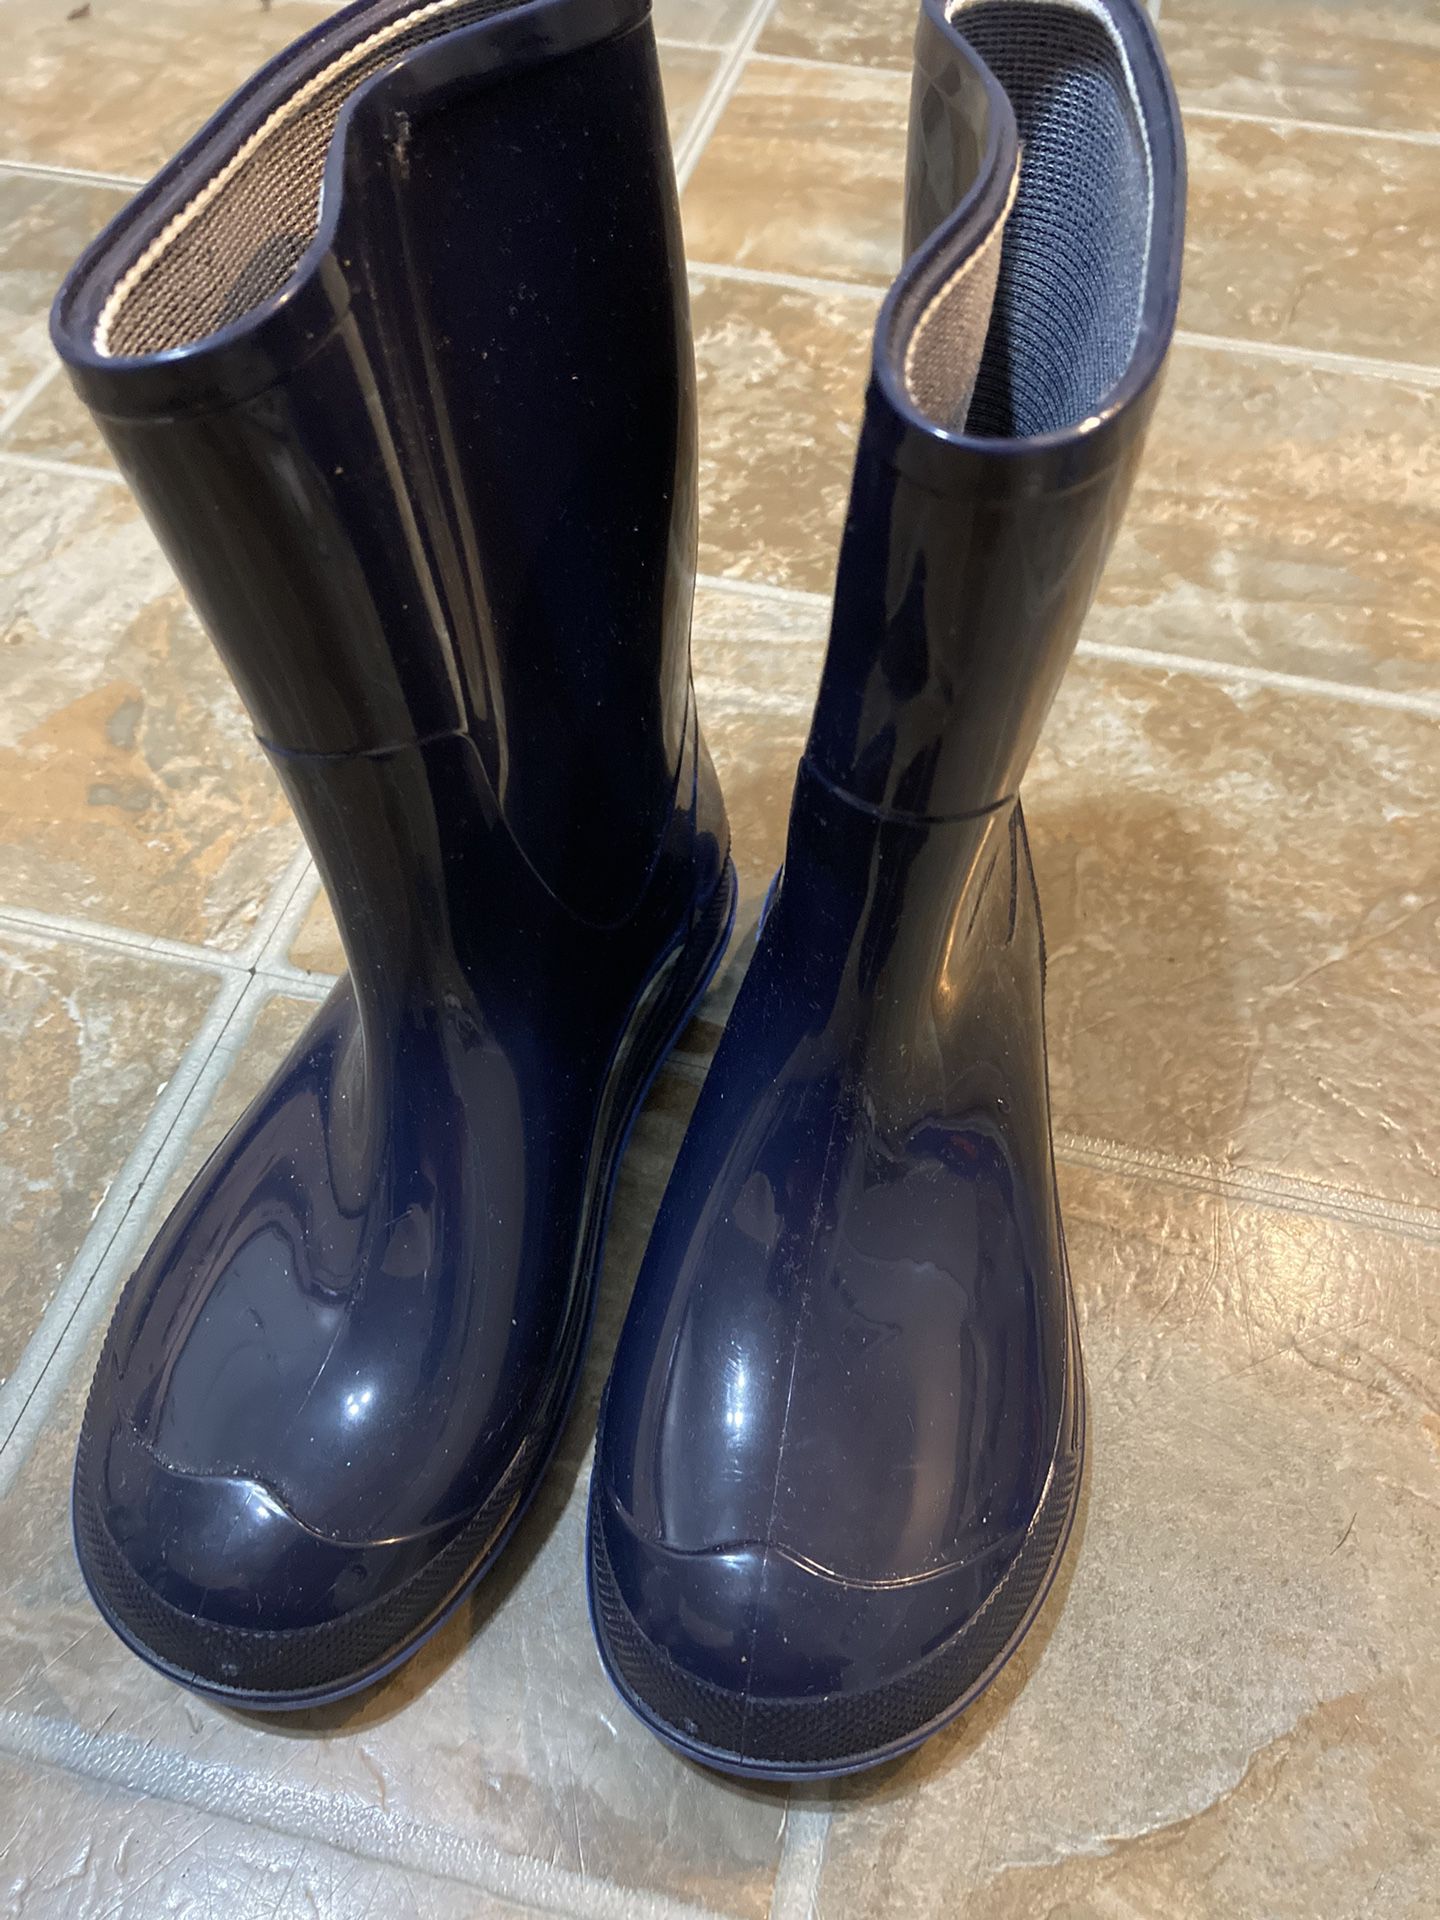 Rain Boots For Boys!!! New 